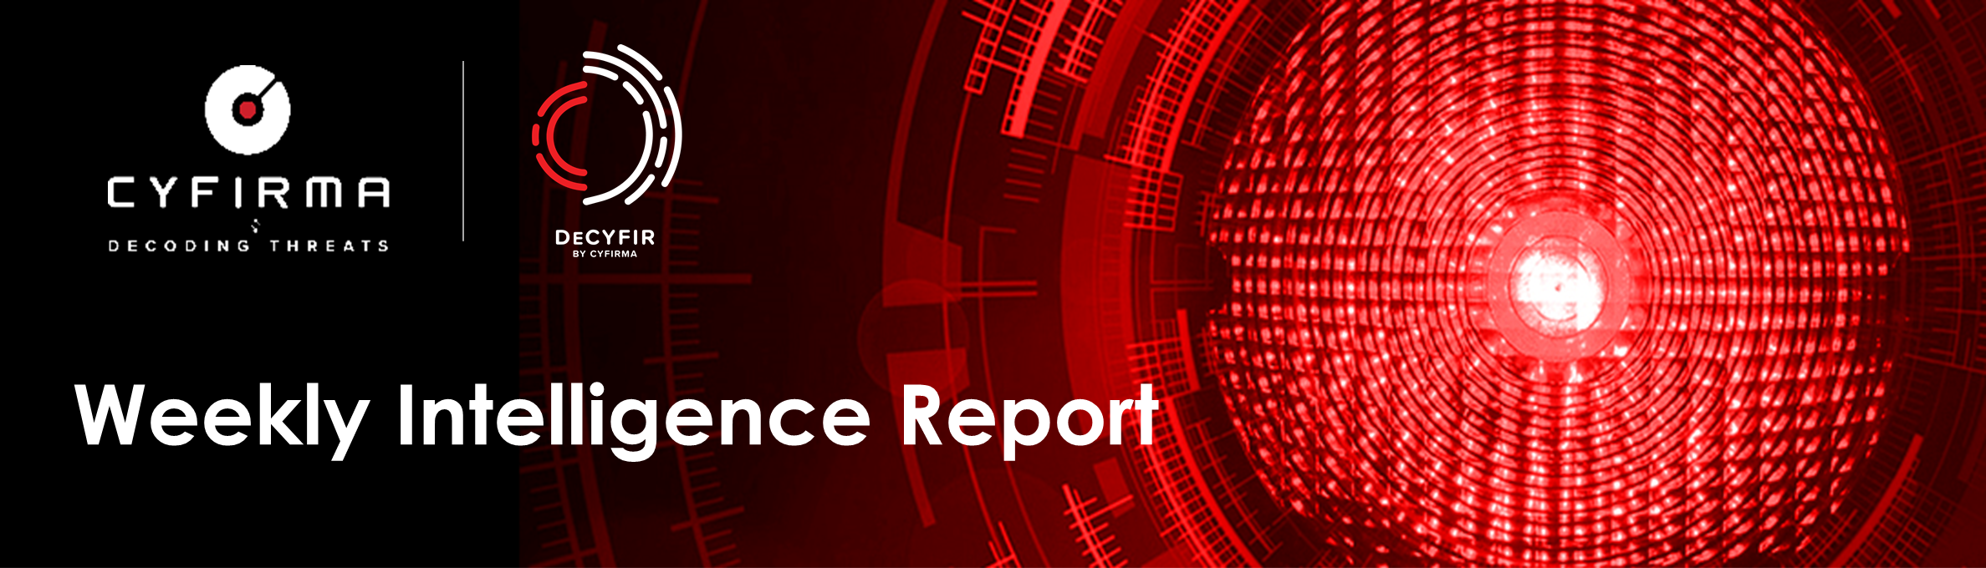 Weekly Cyber-Intelligence Report – 25 Apr 2021